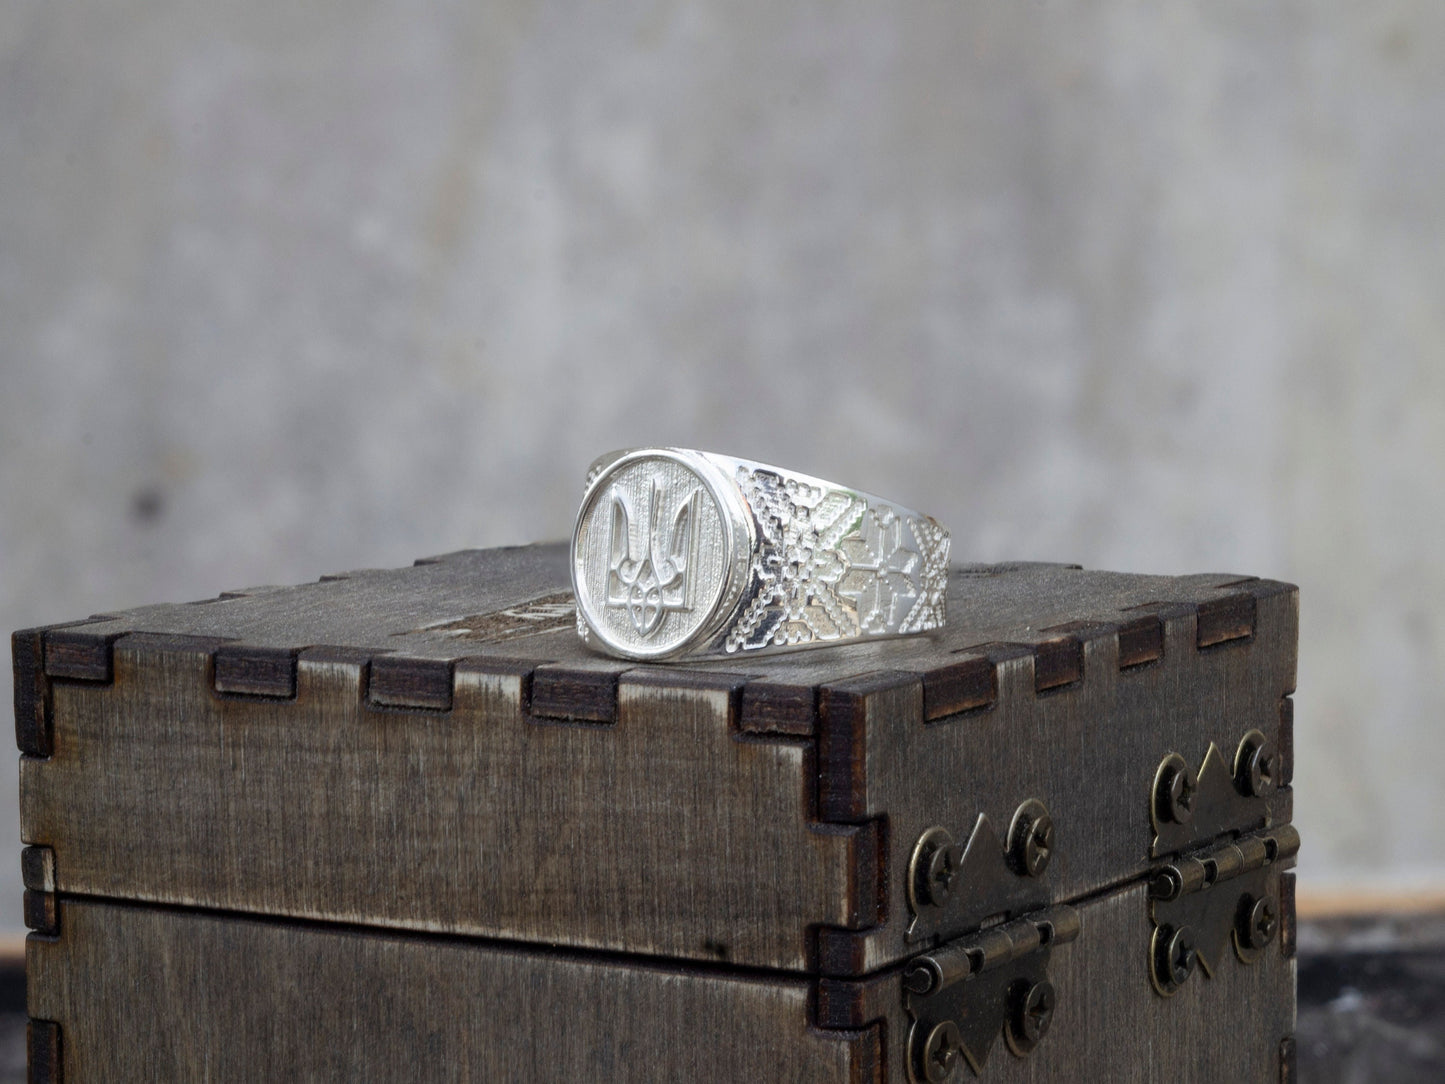 Ukraine ring Trizub Ukrainian ring with ornament  Silver trident ring of Ukraine Tryzub ring of Ukraine